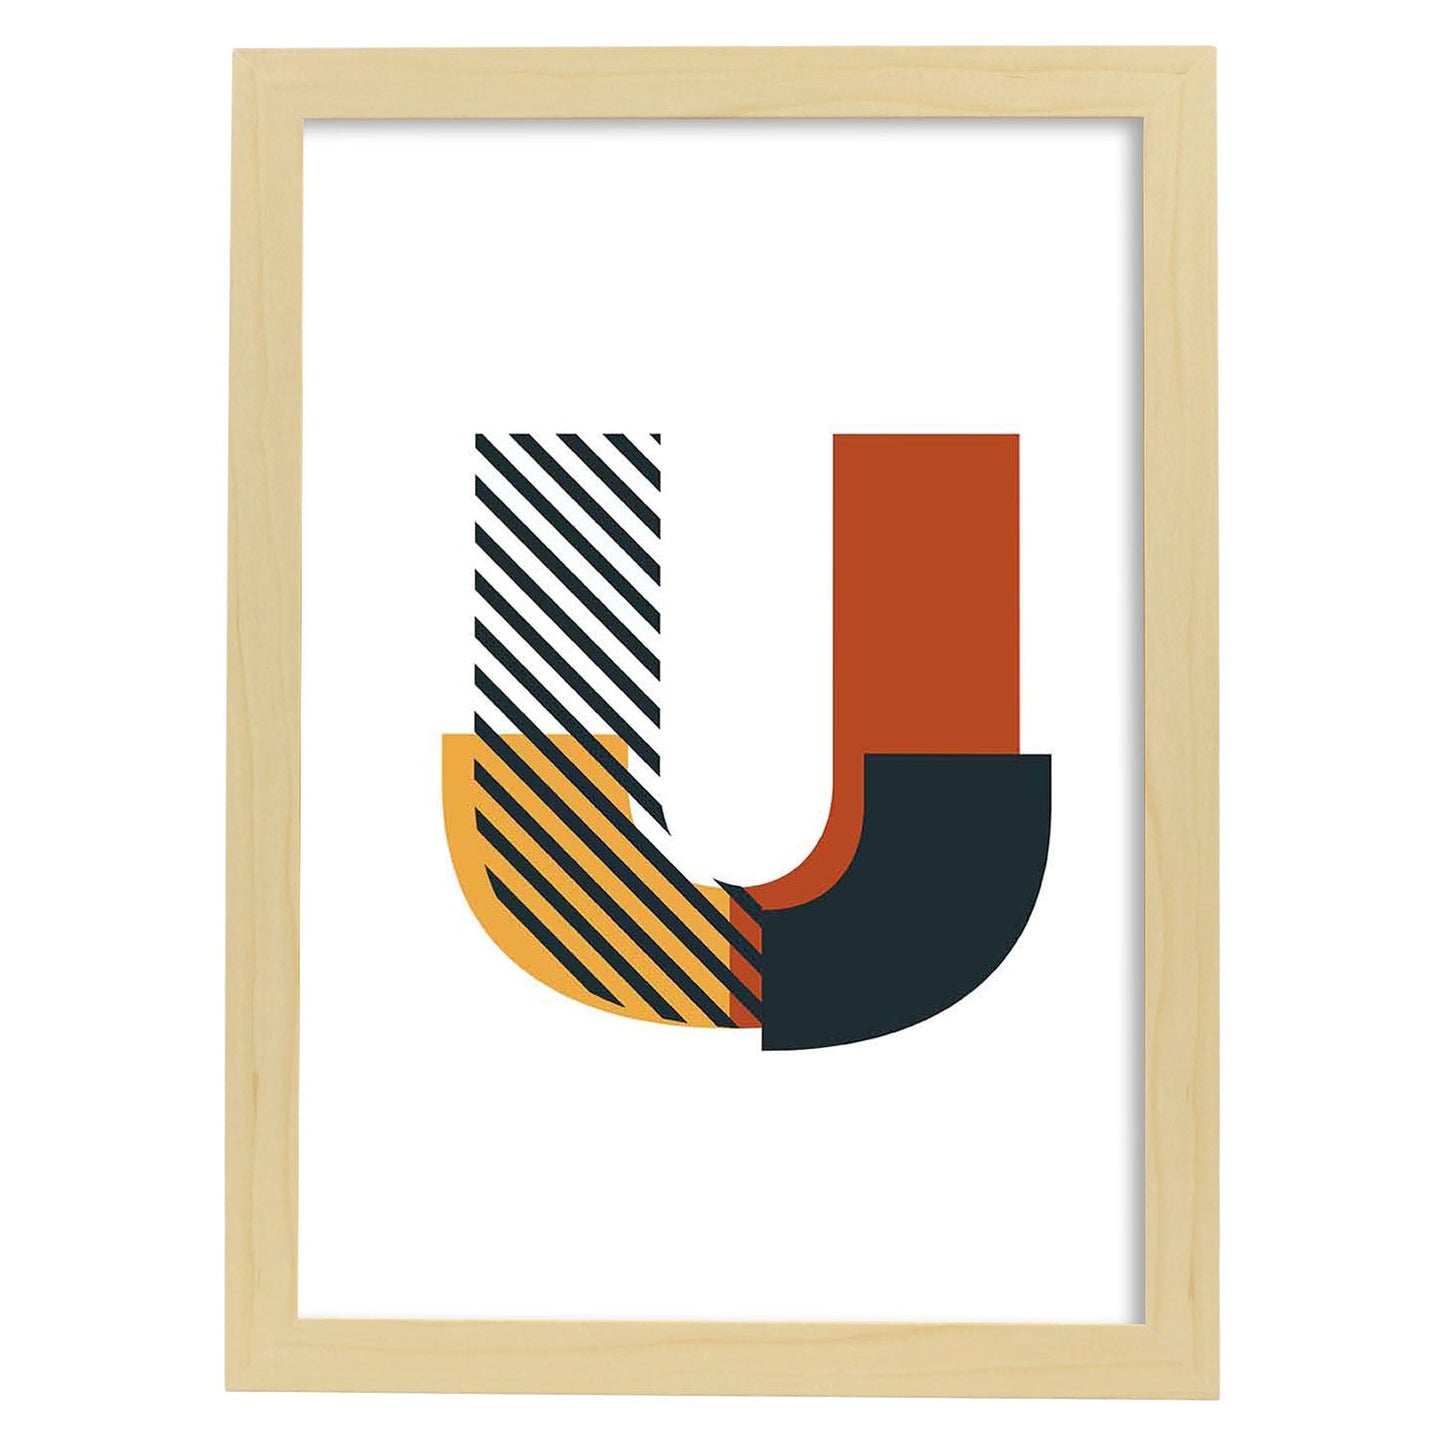 Poster de letra U. Lámina estilo Geometria con imágenes del alfabeto.-Artwork-Nacnic-A3-Marco Madera clara-Nacnic Estudio SL